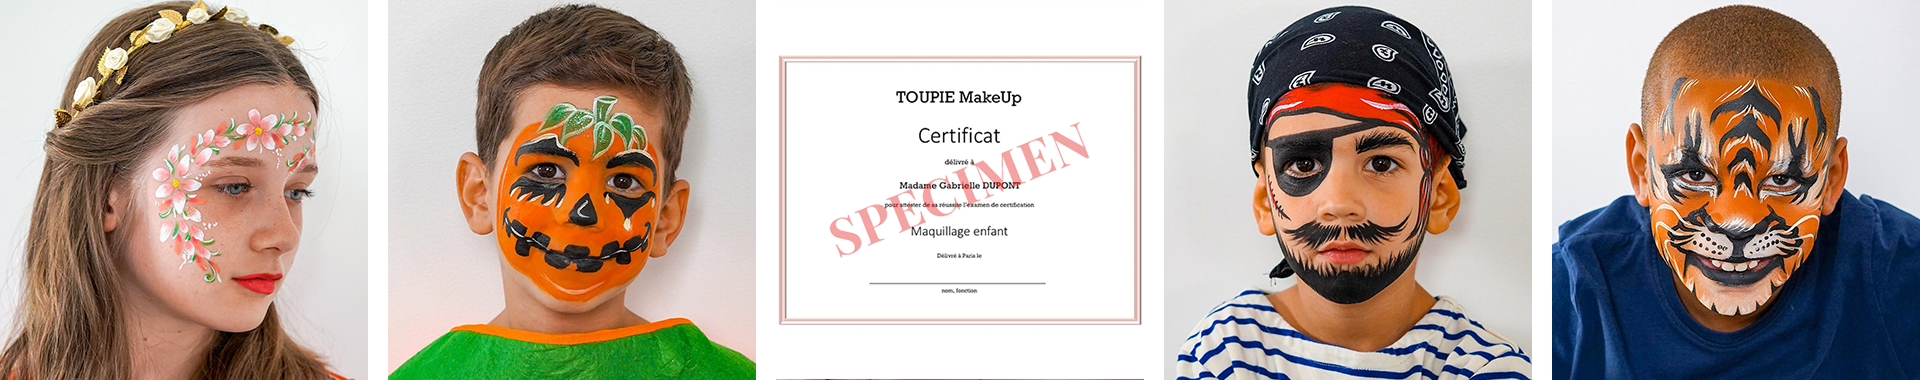 certification-maquillage-enfant-niveau1